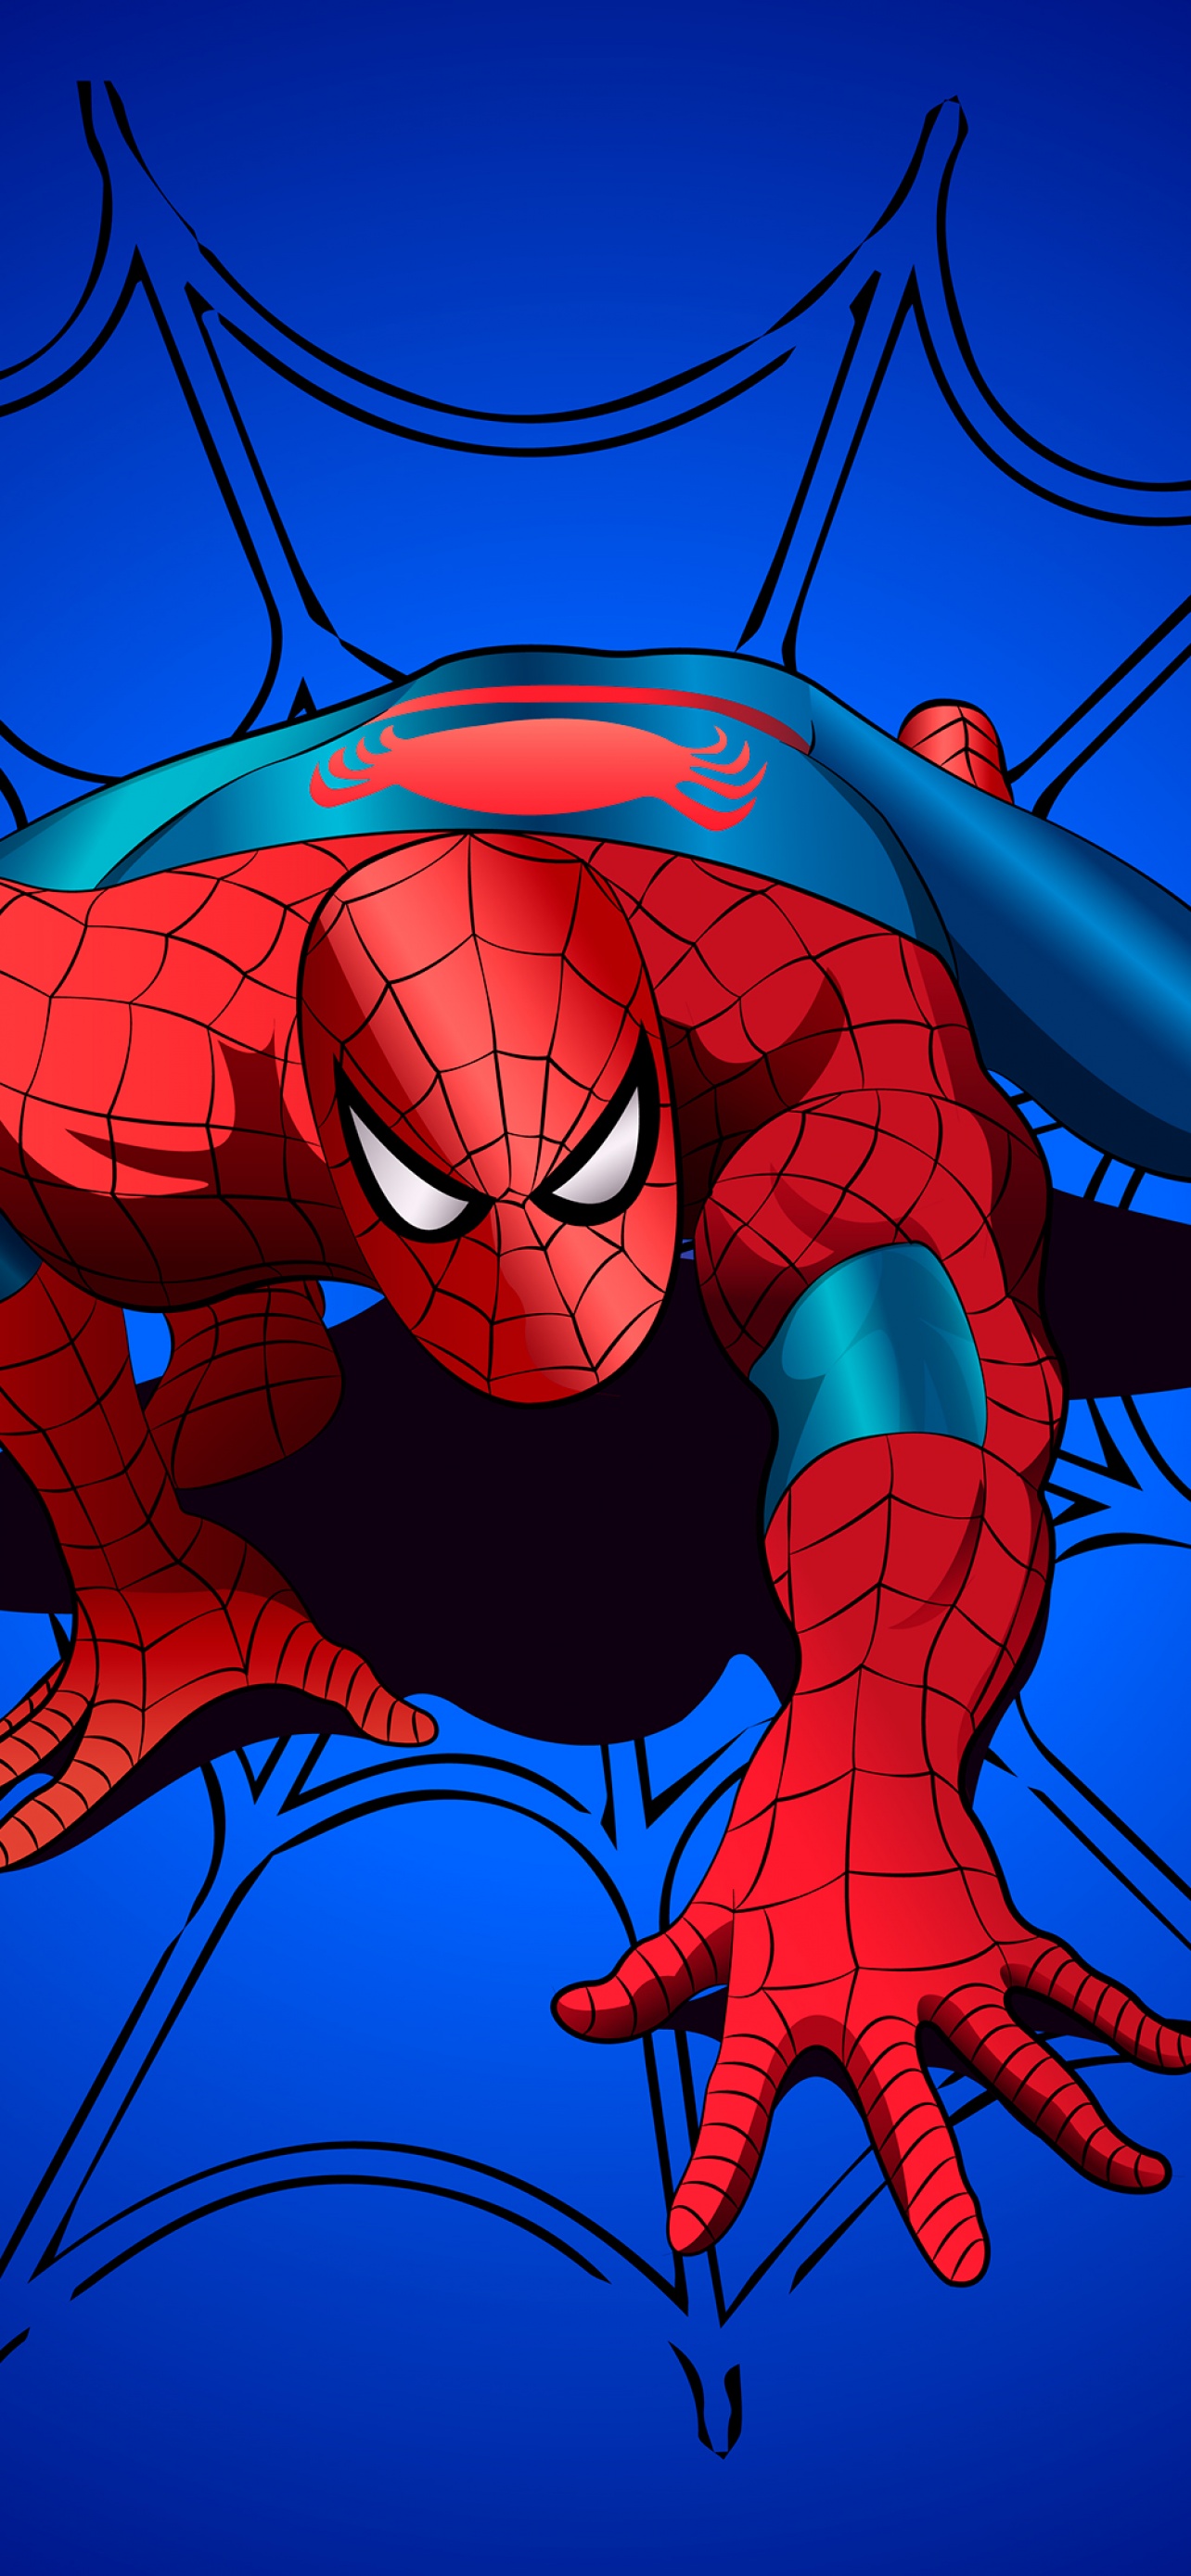 Spider-Man Wallpaper 4K, Blue background, Graphics CGI, #1579